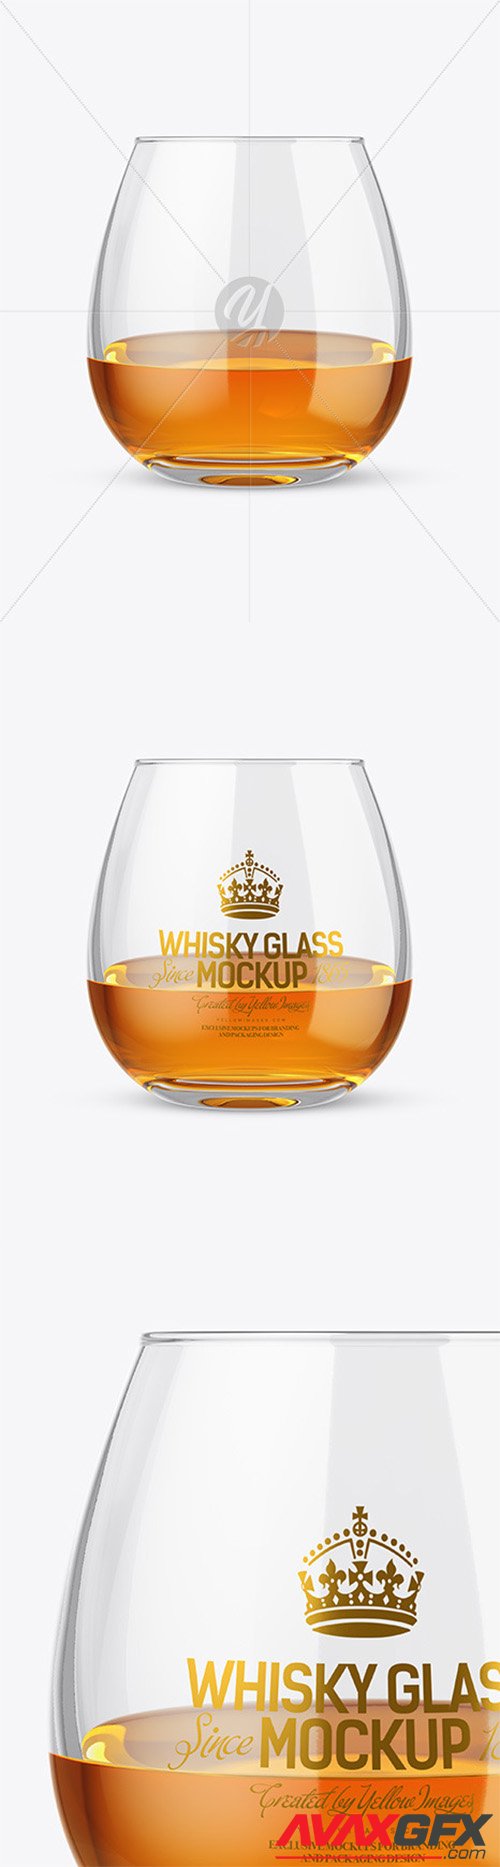 Whisky Glass Mockup 57163